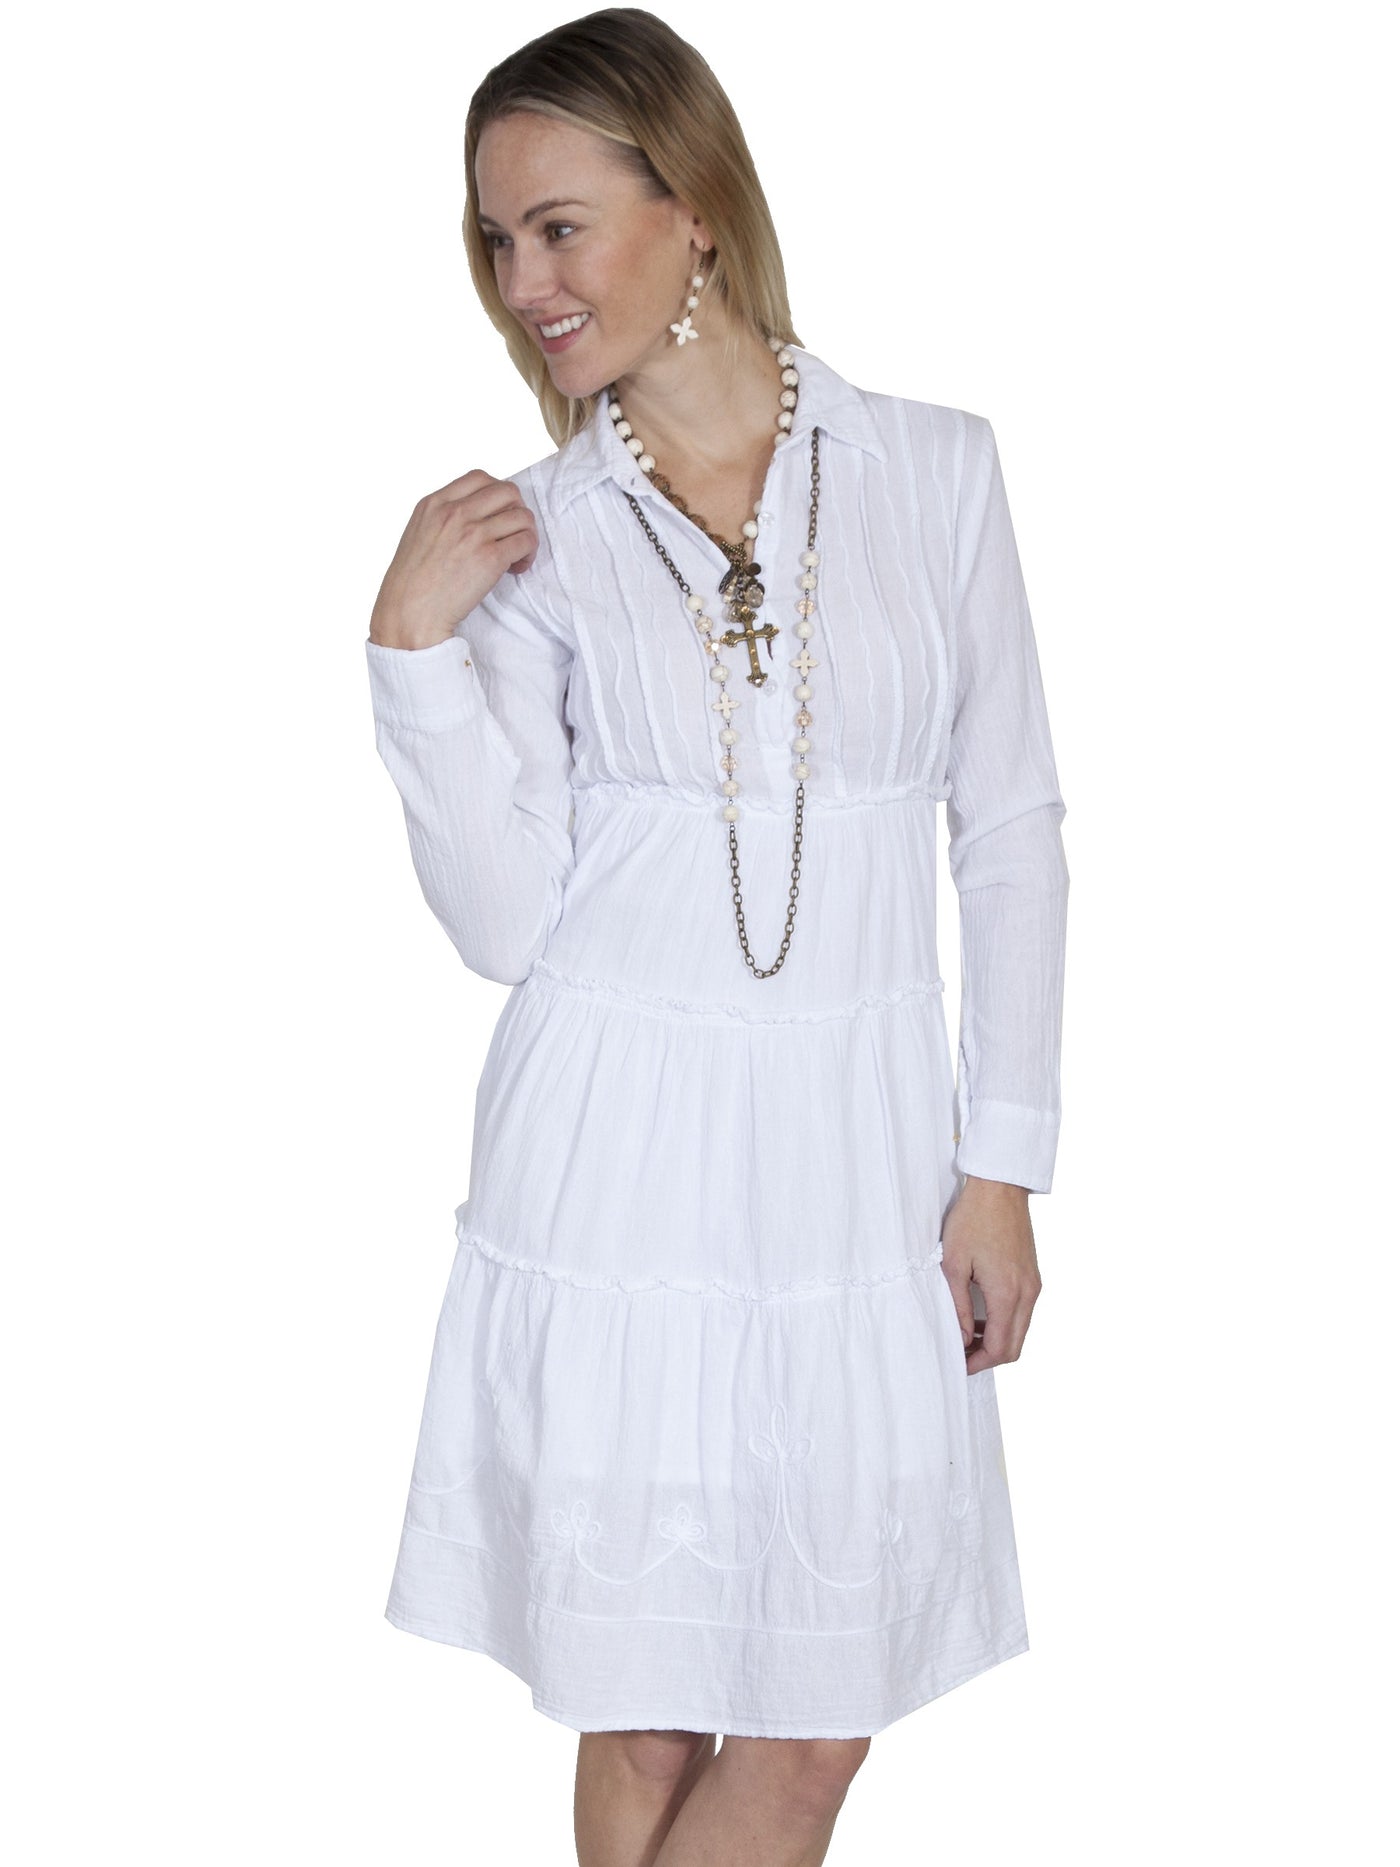 Bohemian Style Cotton Dress in White